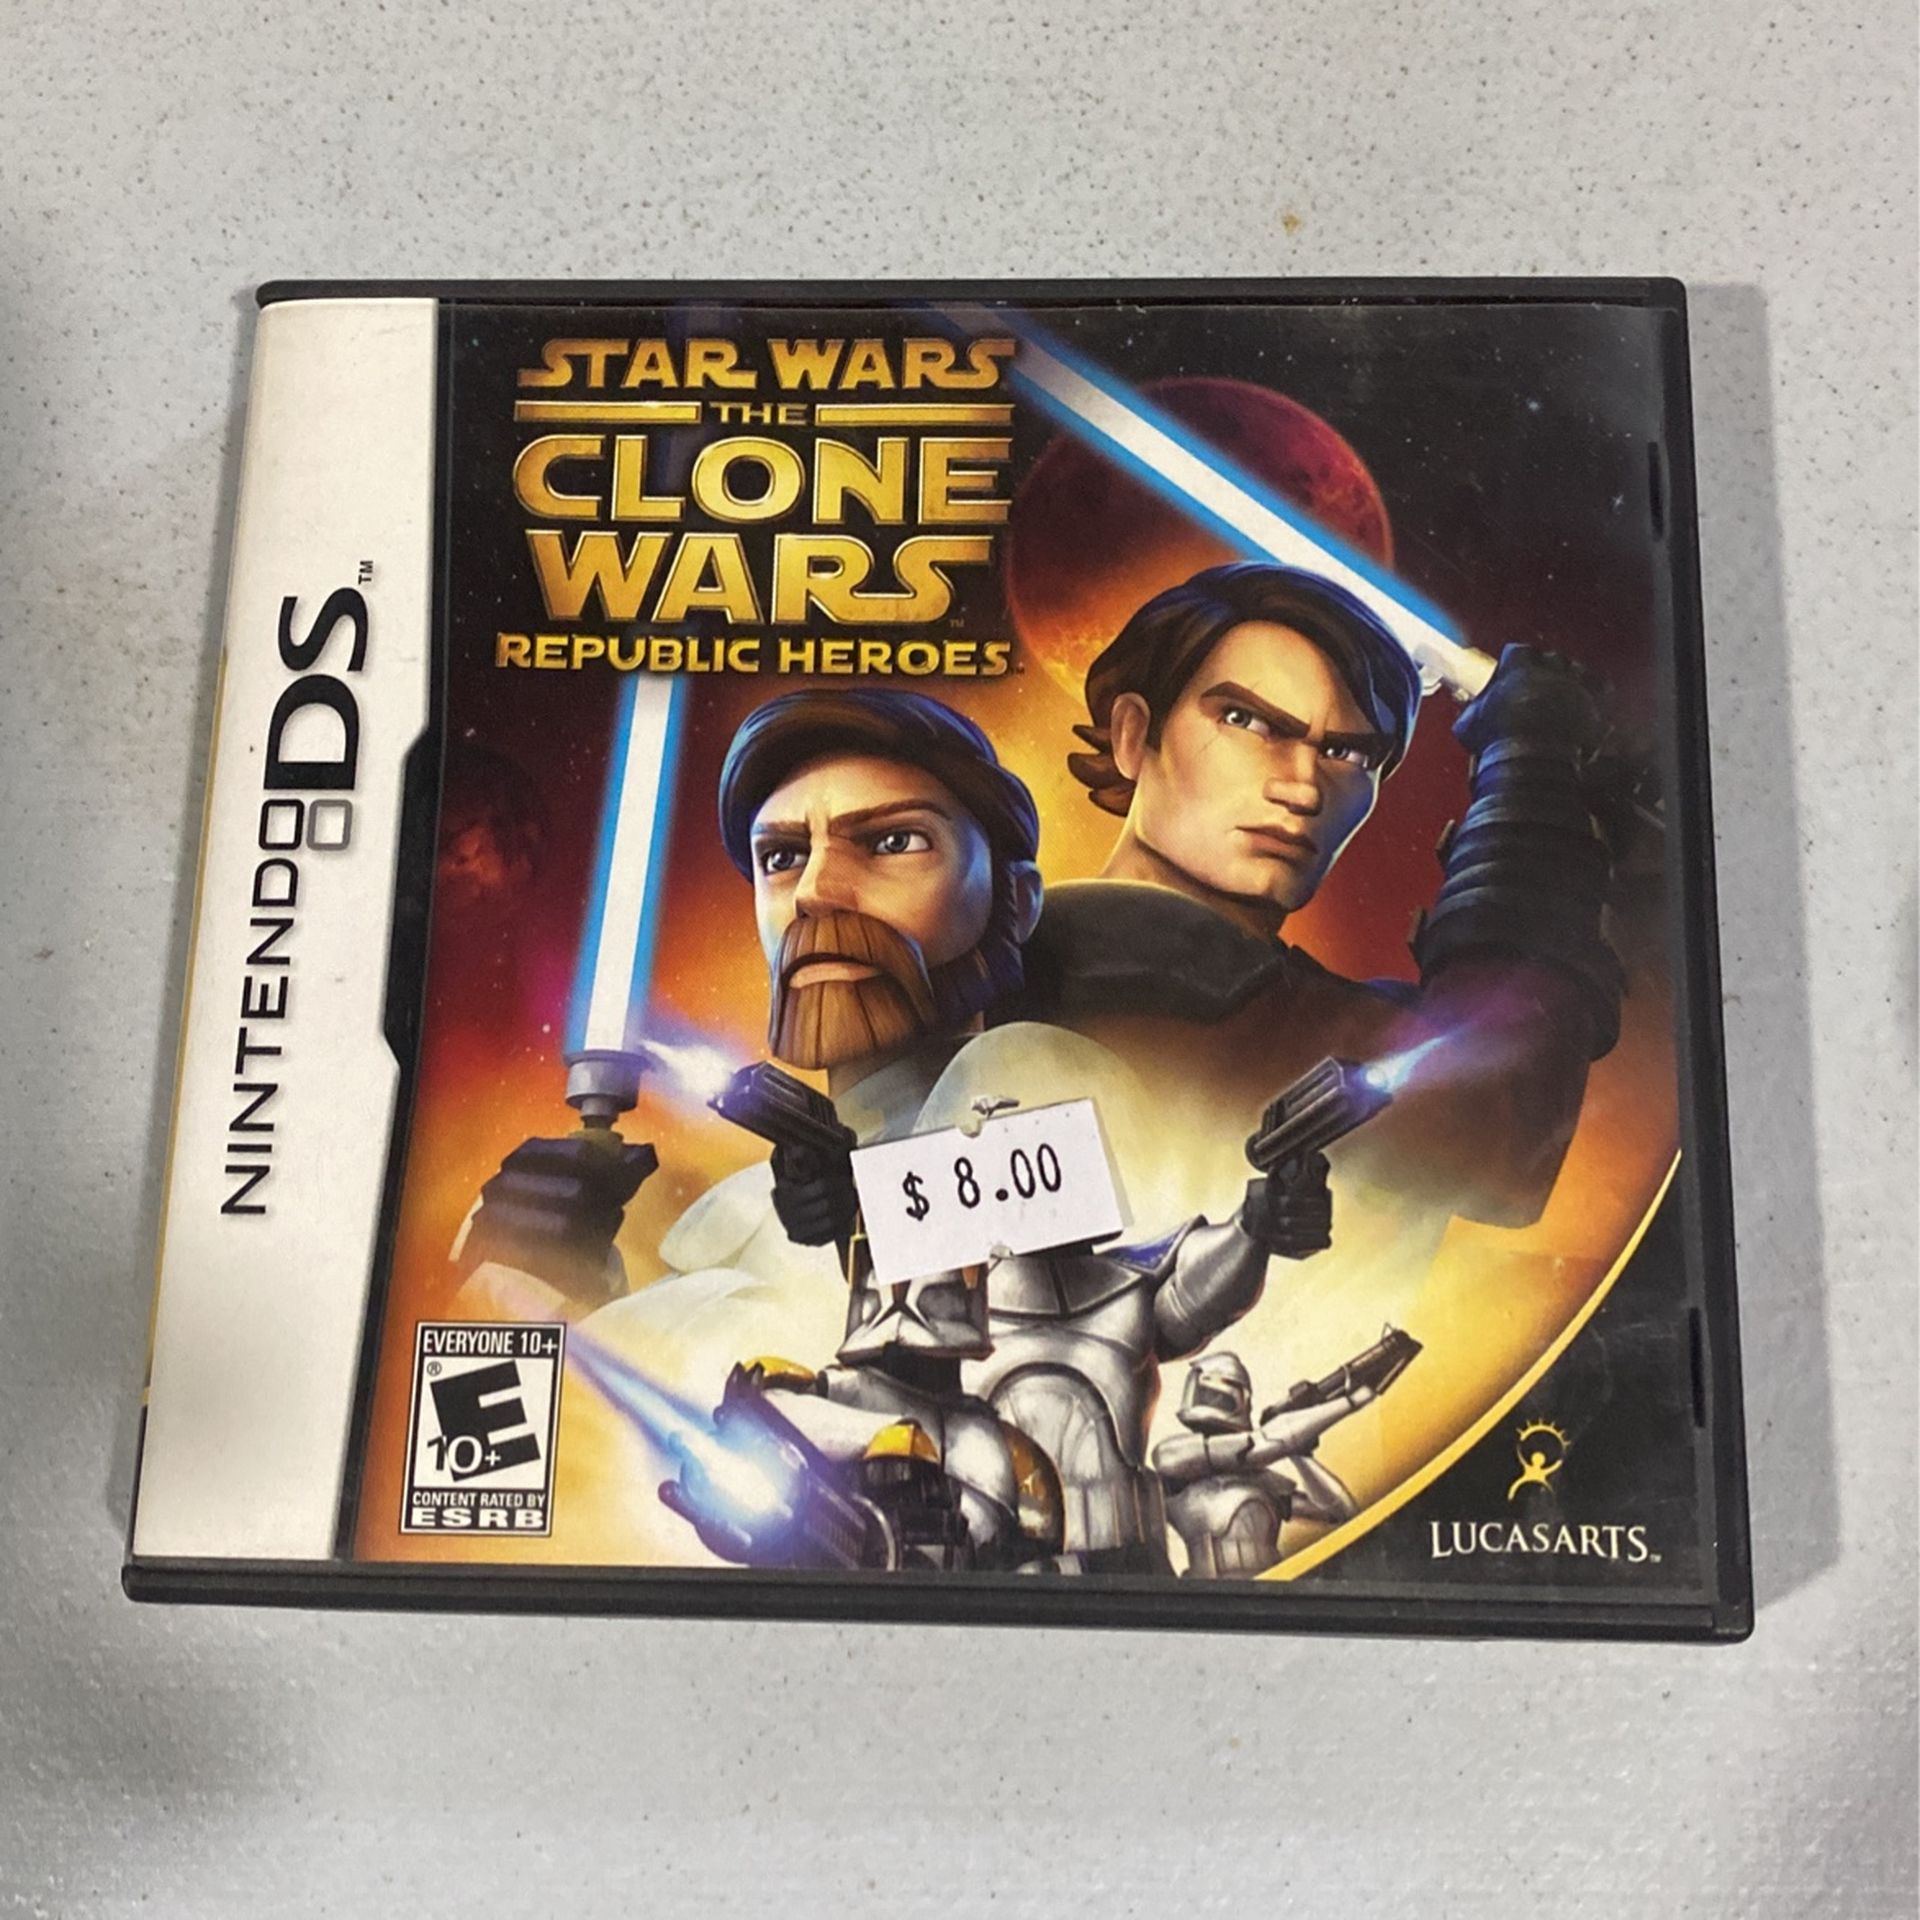 Star Wars: The Clone Wars - Republic Heroes (Nintendo DS, 2009)